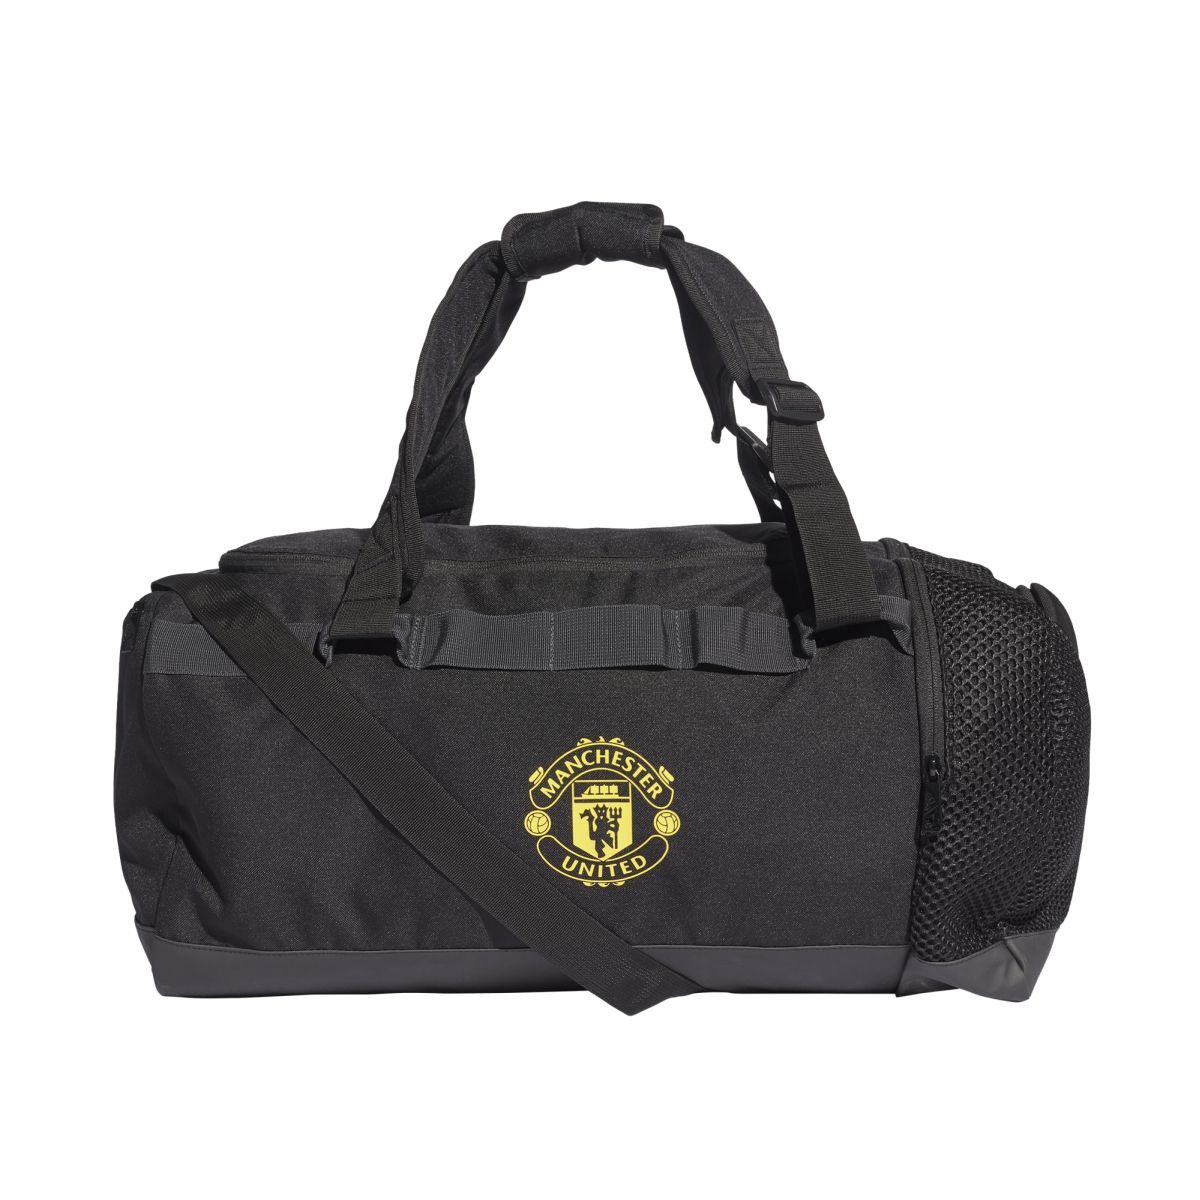  DY7688 - Bag adidas Manchester United 